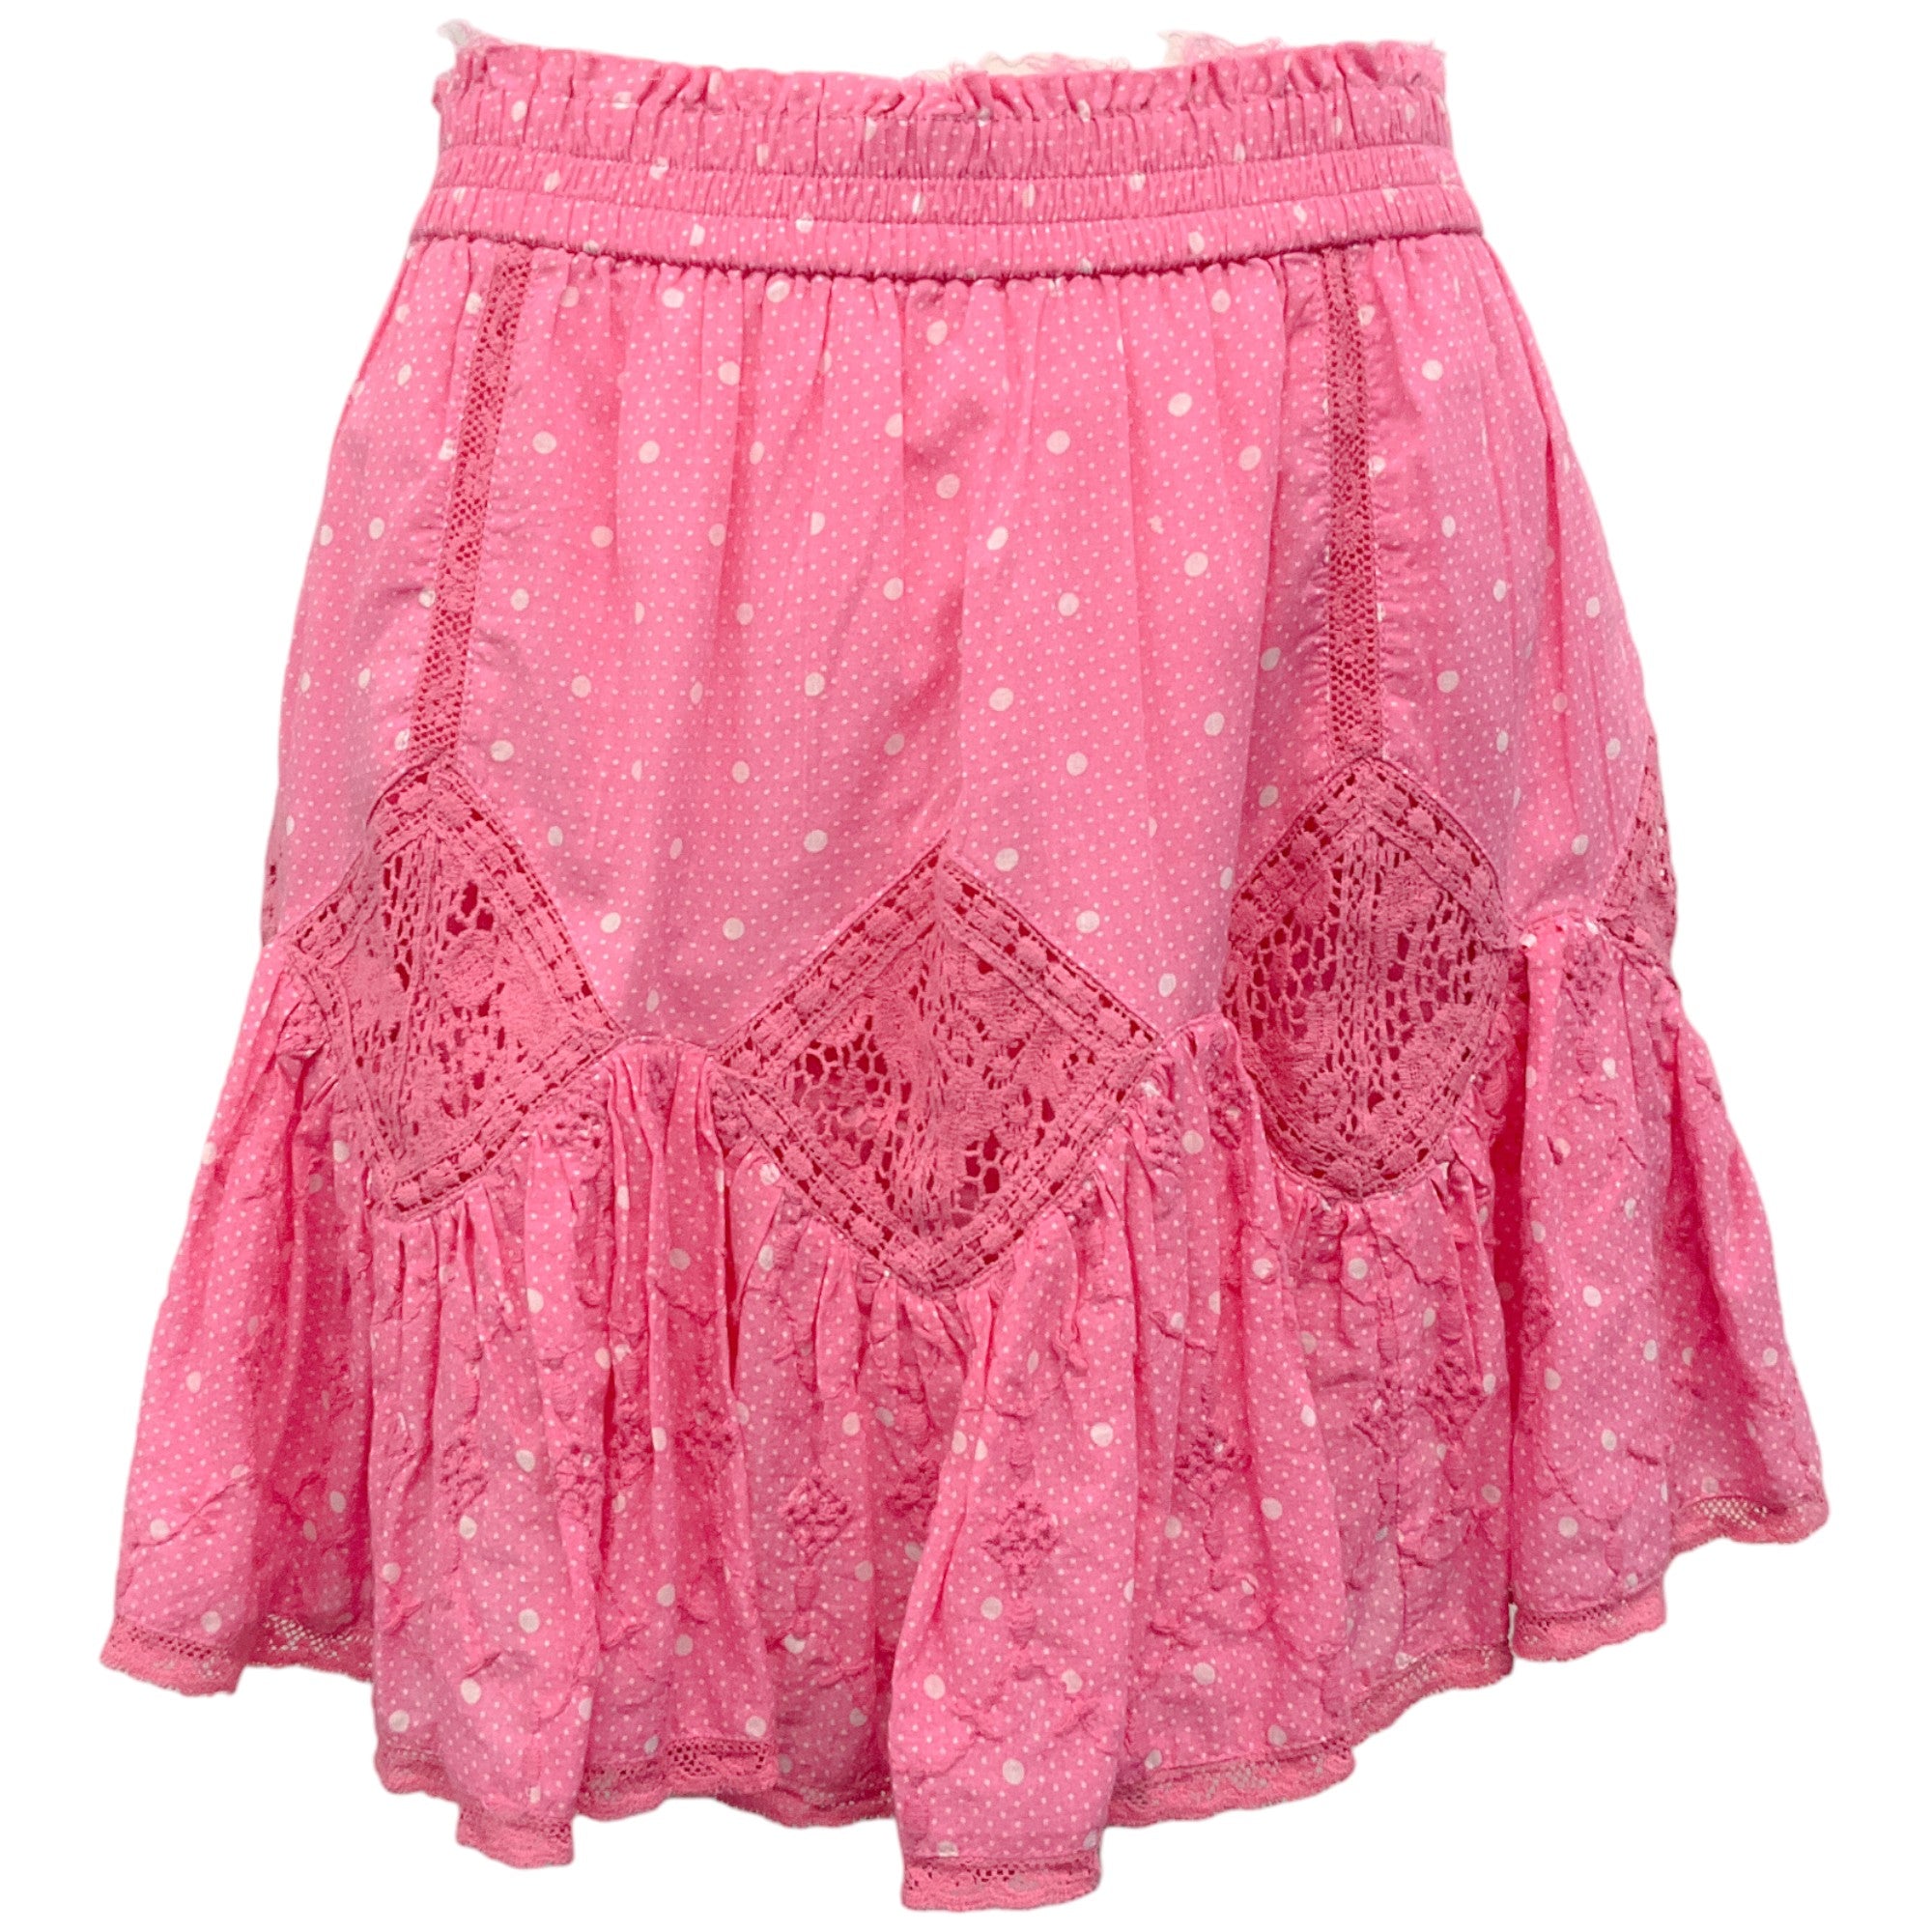 Love Shack Fancy Hot Pink Cherry Adia Mini Skirt